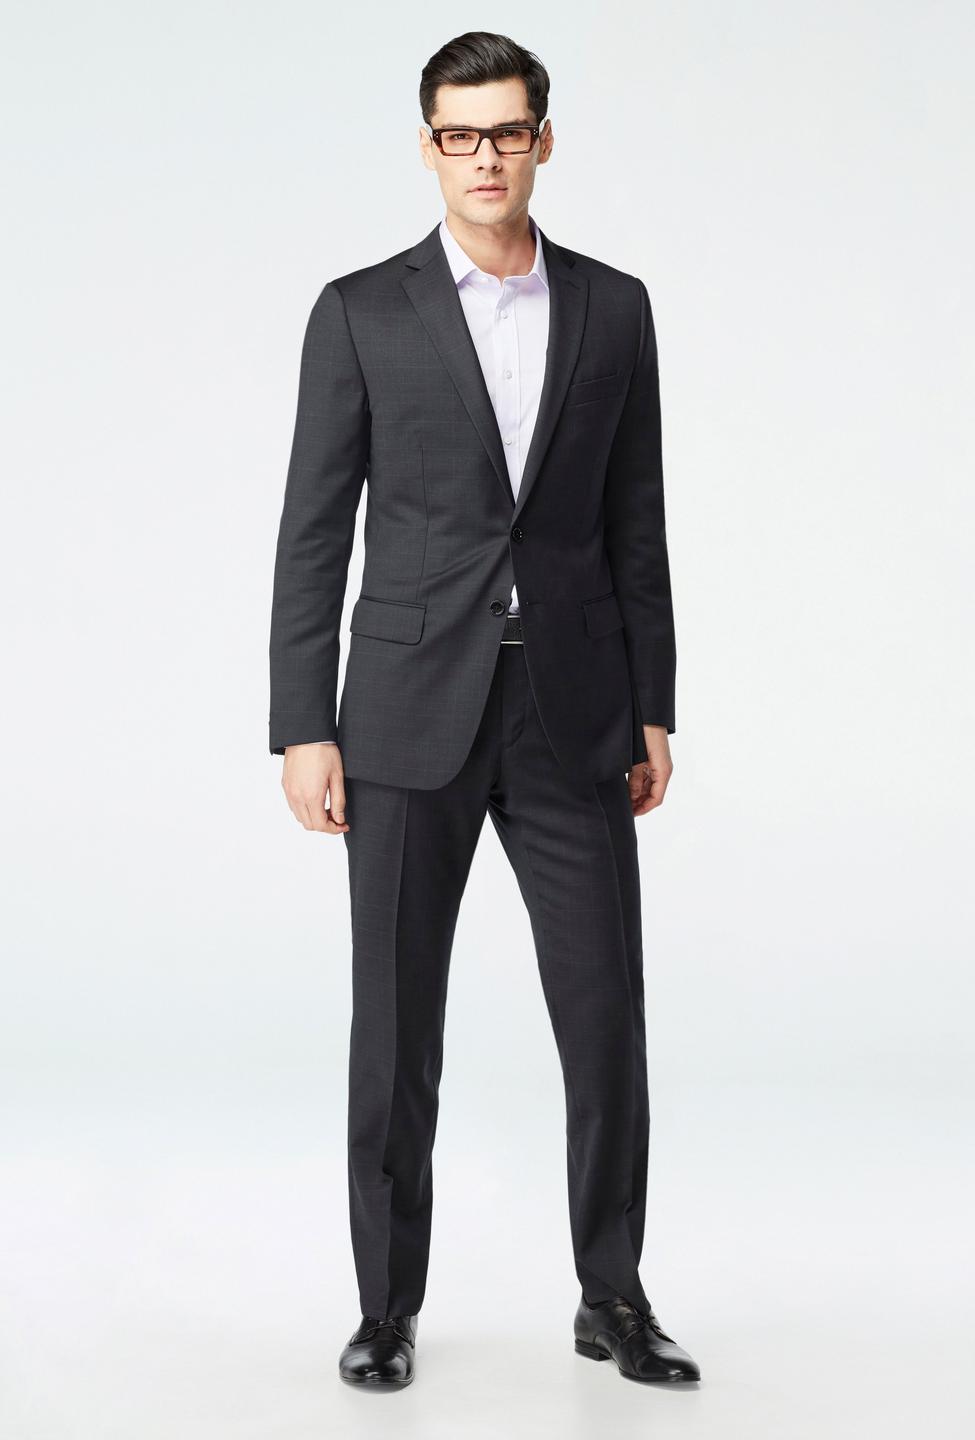 Hemsworth Prince of Wales Black Suit